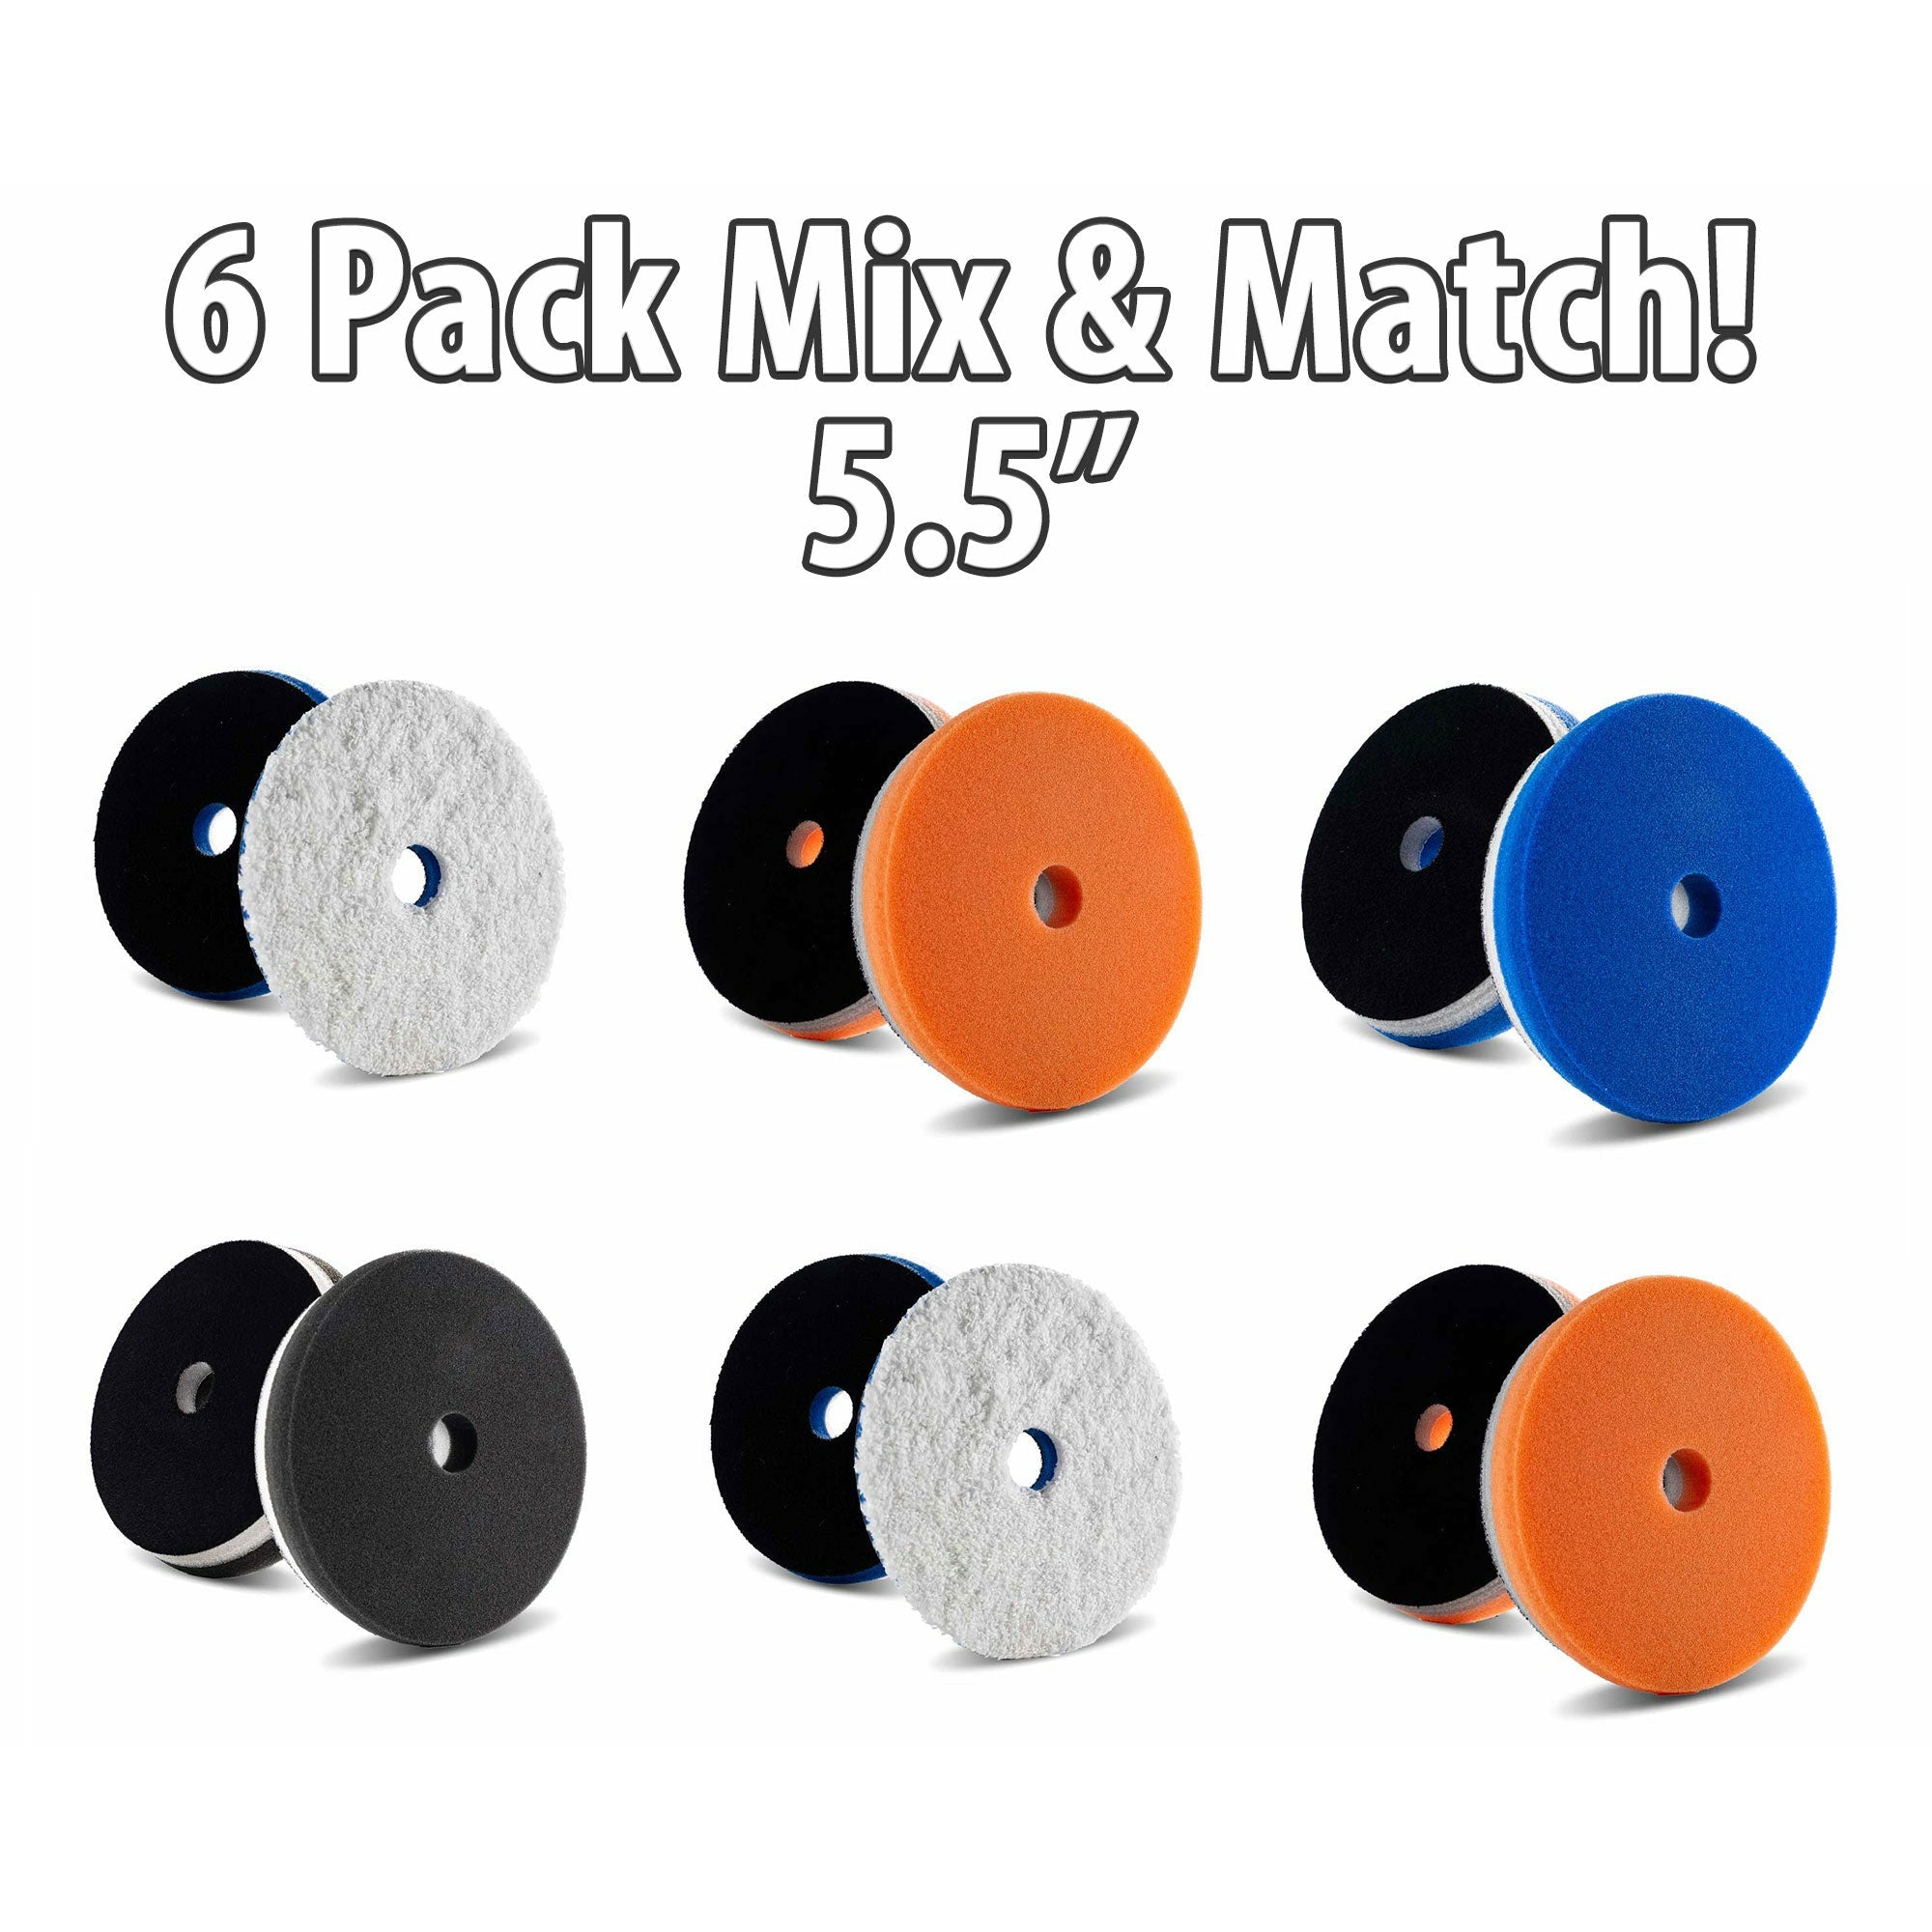 6 Pack 5.5 Inch Lake Country HDO Foam Pad - Your Choice - FREE BONUS!